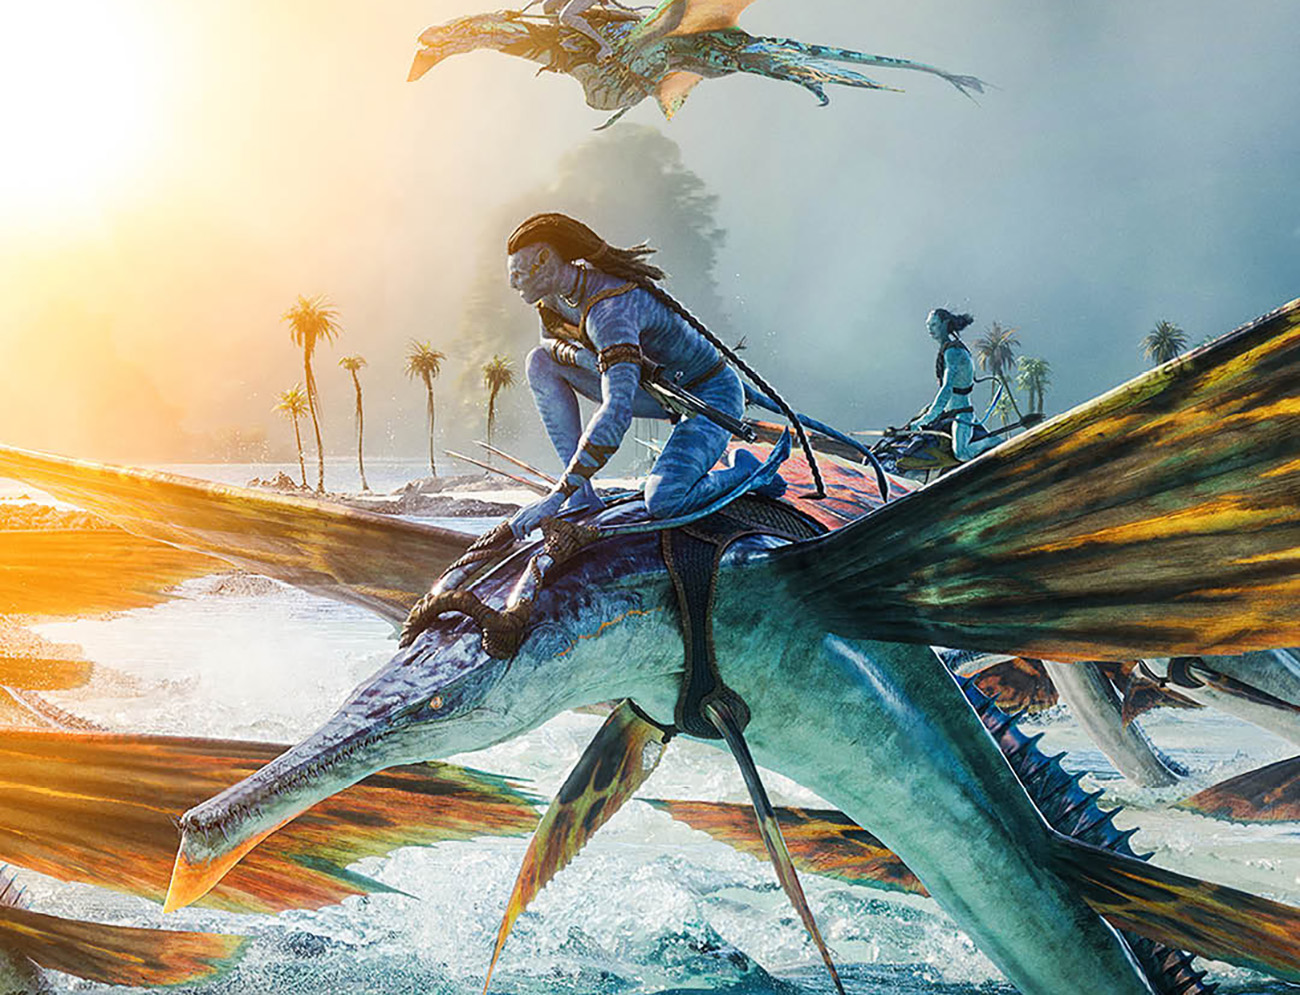 Avatar The Way of Water, Μεγάλες προσδοκίες και άλλες 4 ταινίες και σειρές στο Disney+ τον Ιούνιο